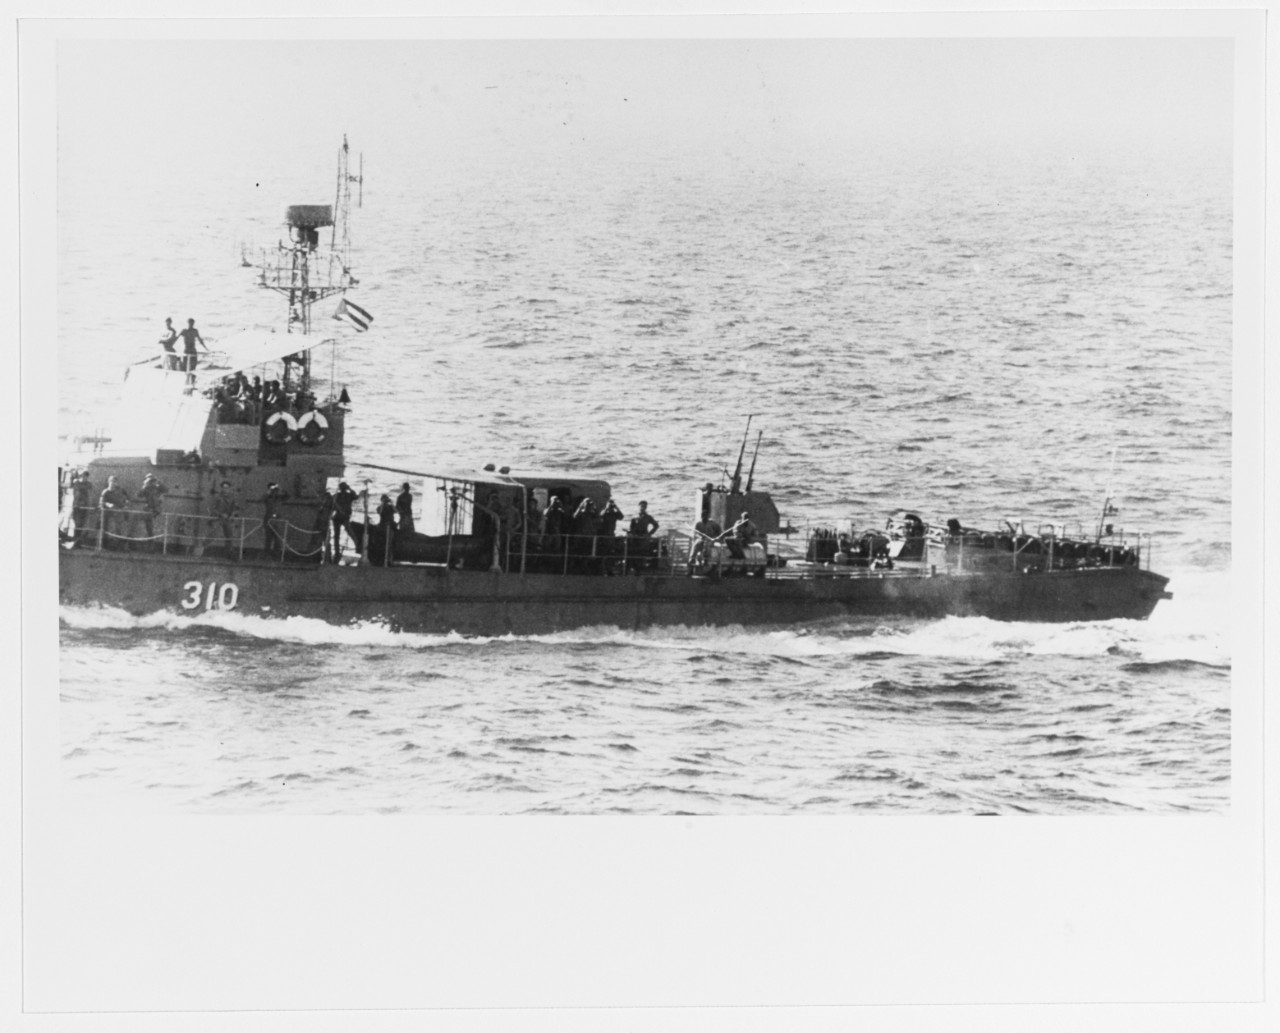 Cuban Navy SO1 Class Submarine Chaser #310